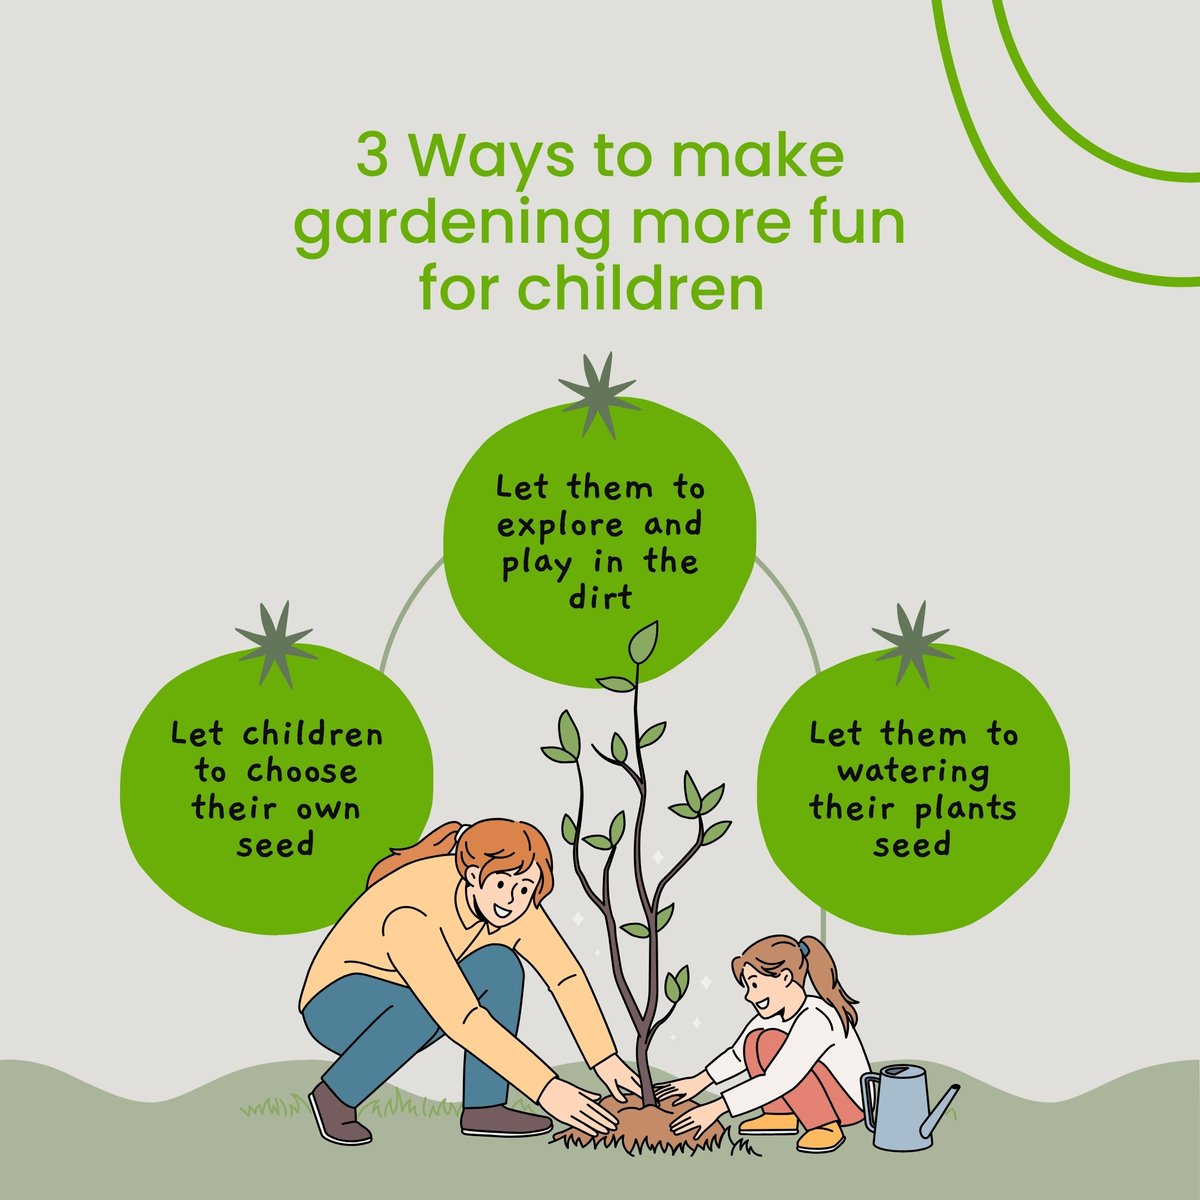 Teach kids gardening skills! Here are fun tips to get them involved.

#gardeningwithkids #teachkidsgardening #gardening #gardeningtips #yardener #GardeningX